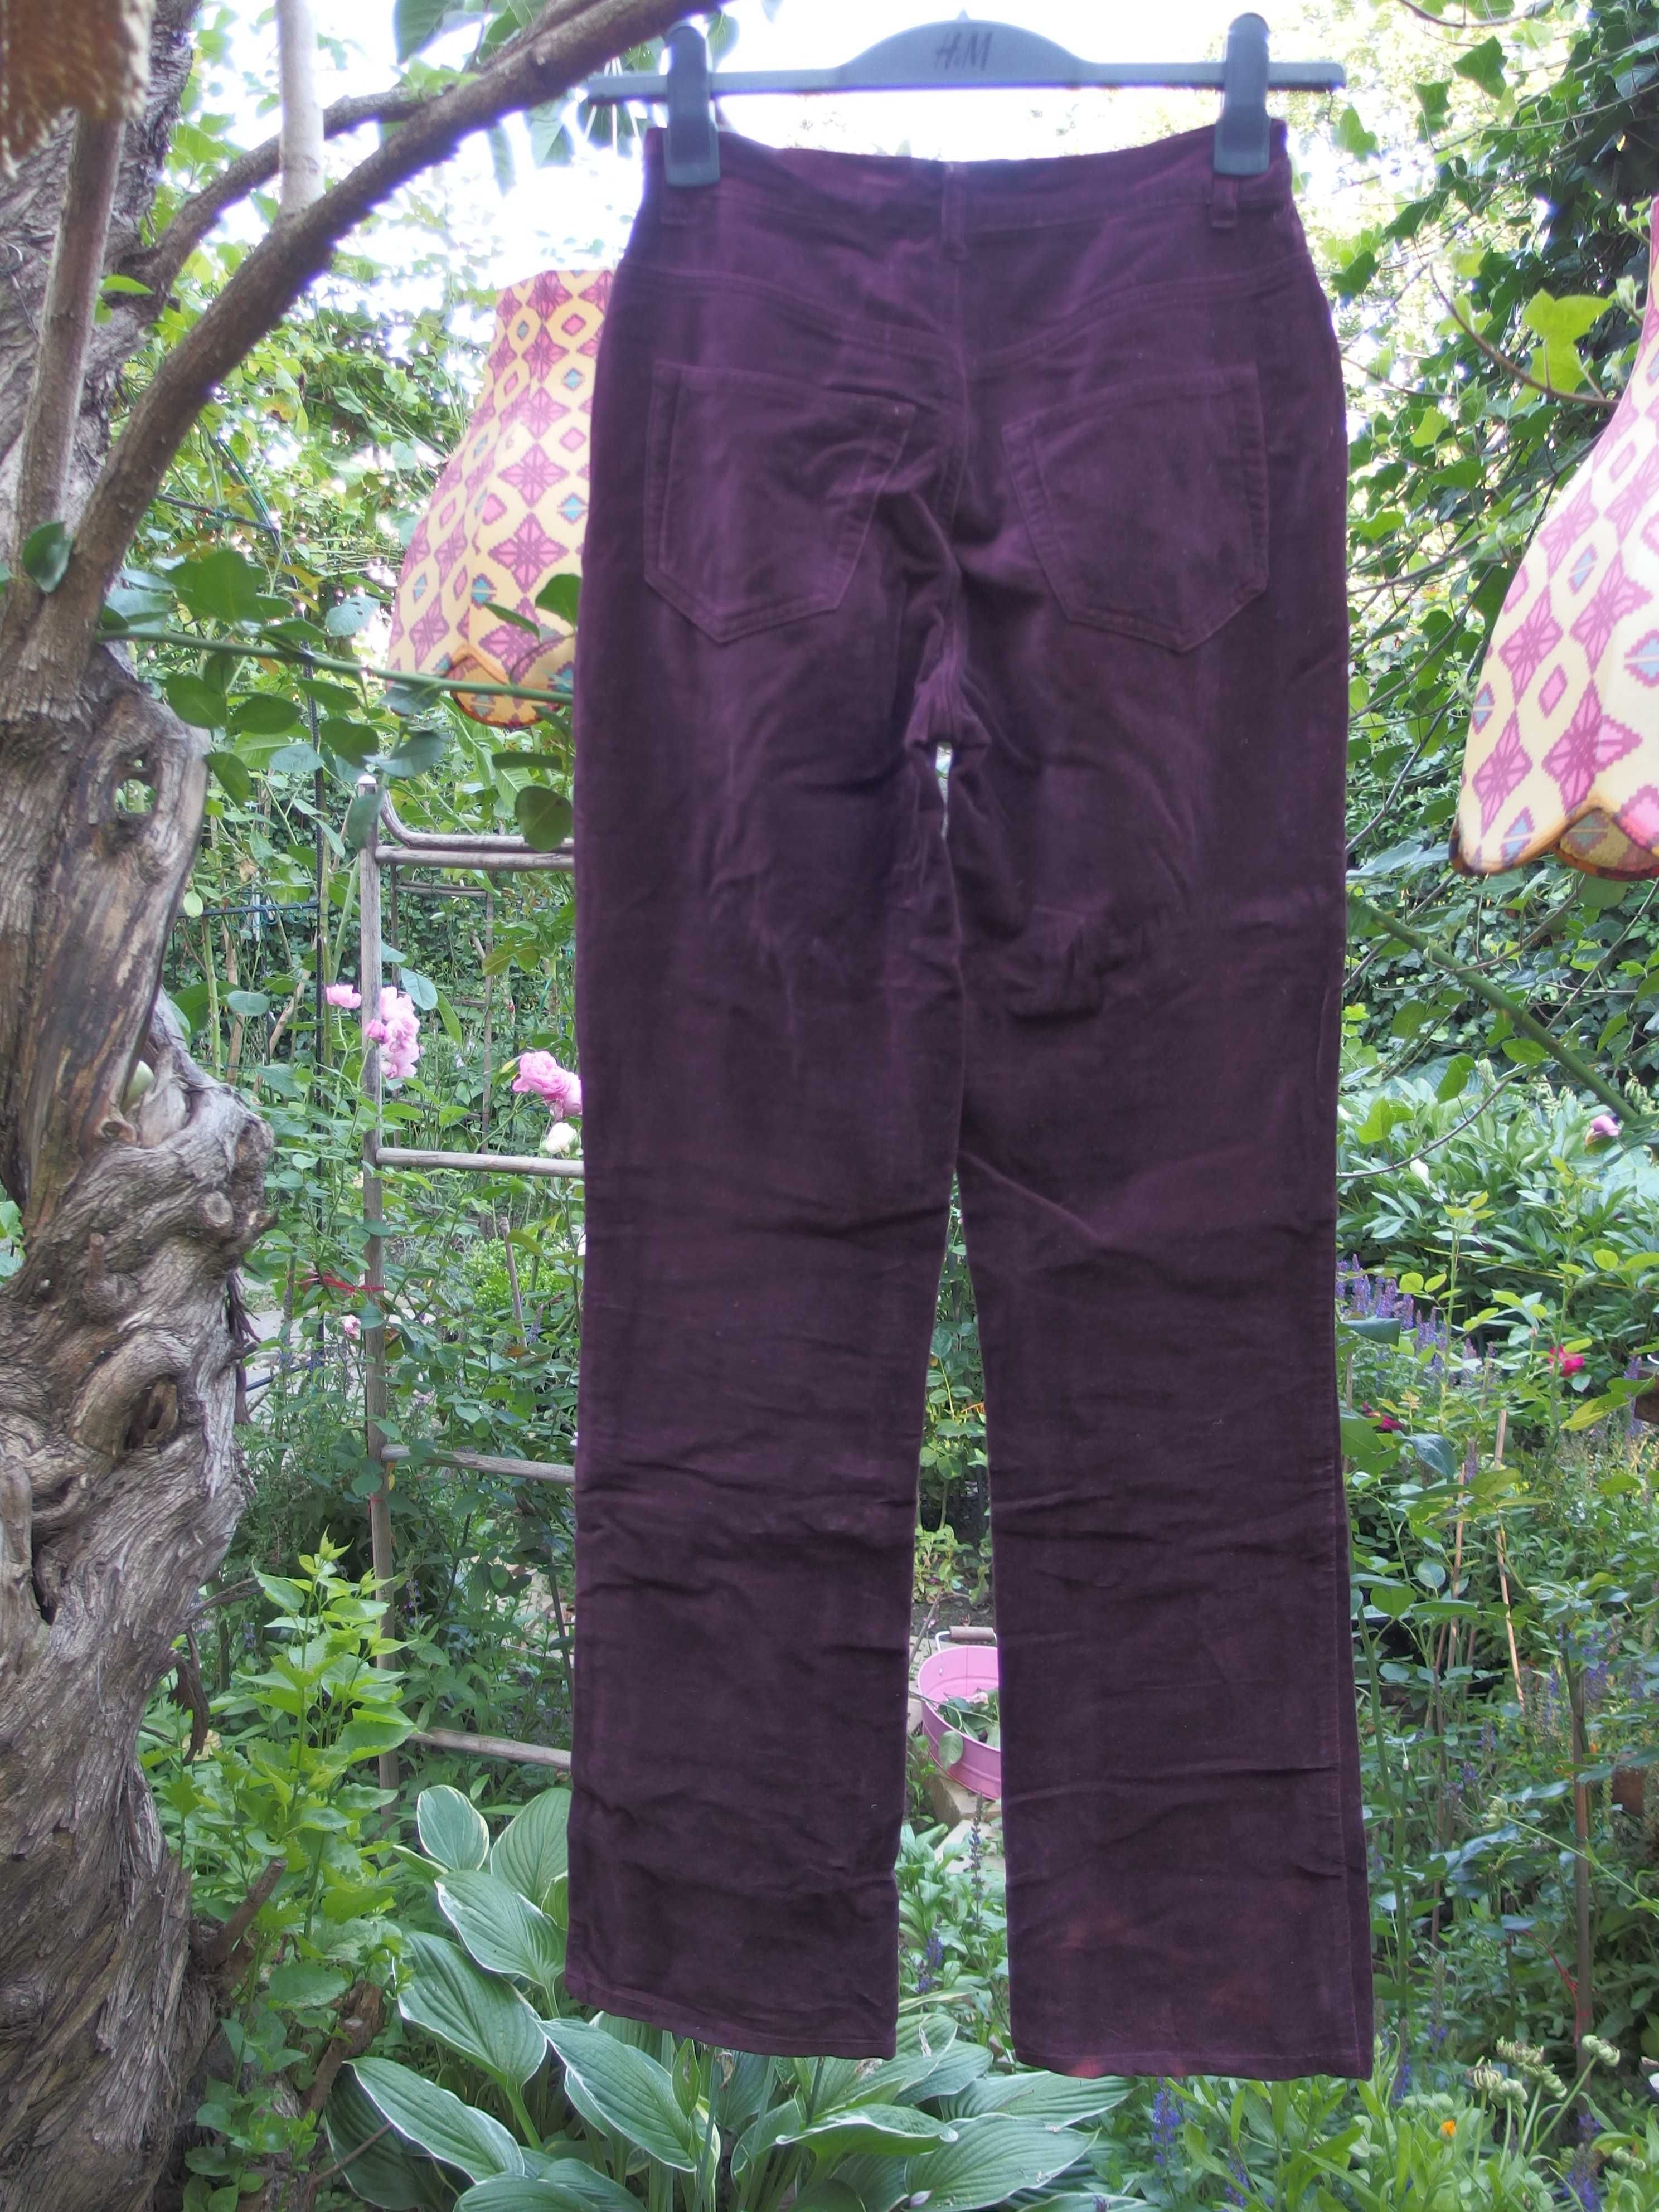 Spodnie welurowe Moto Jeanswear. Bordowe. Made in Hong Kong.